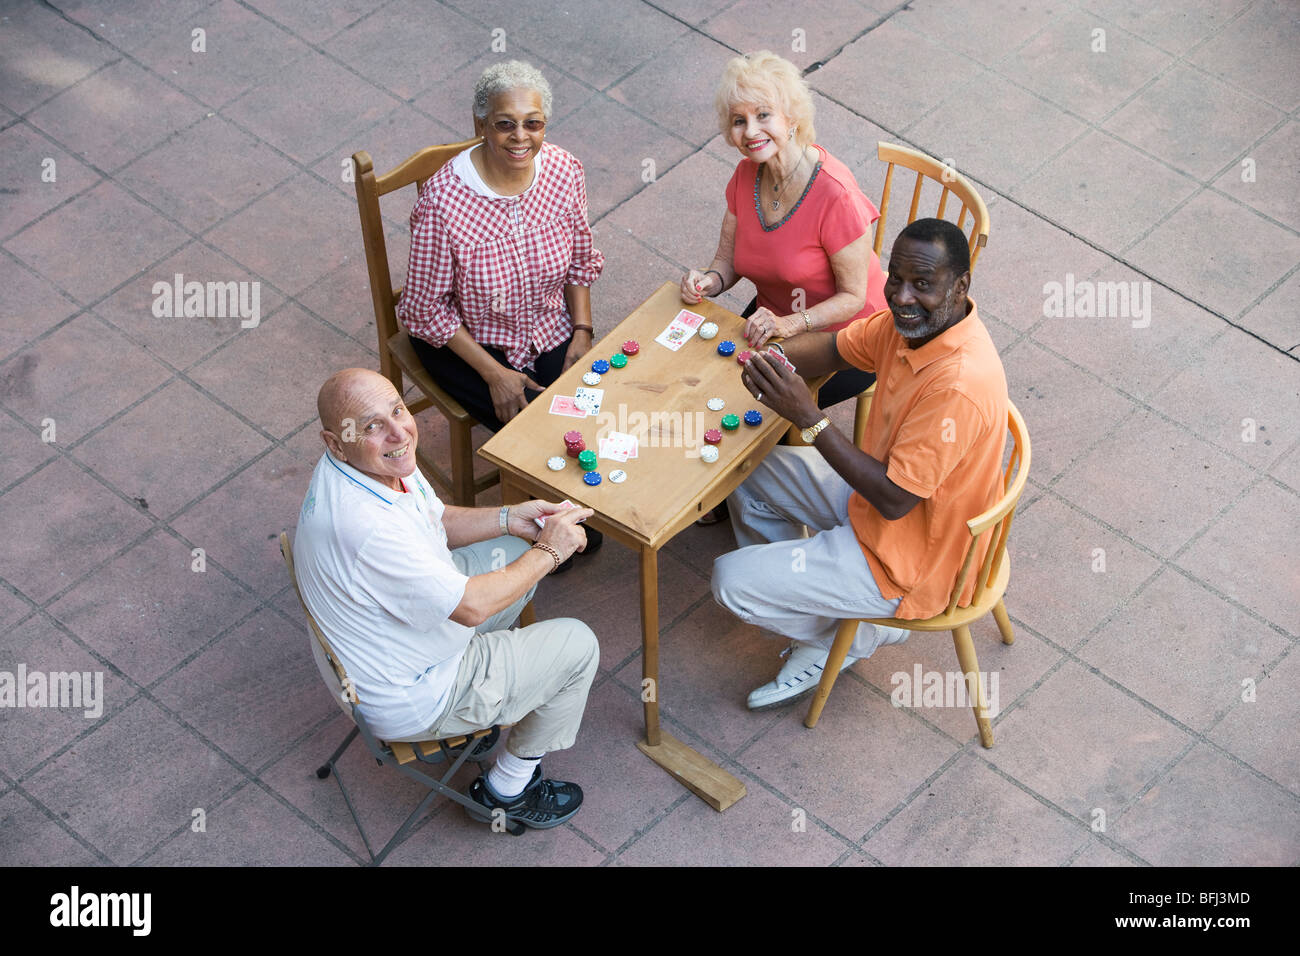 Senior people playing cards, smiling Stock Photo